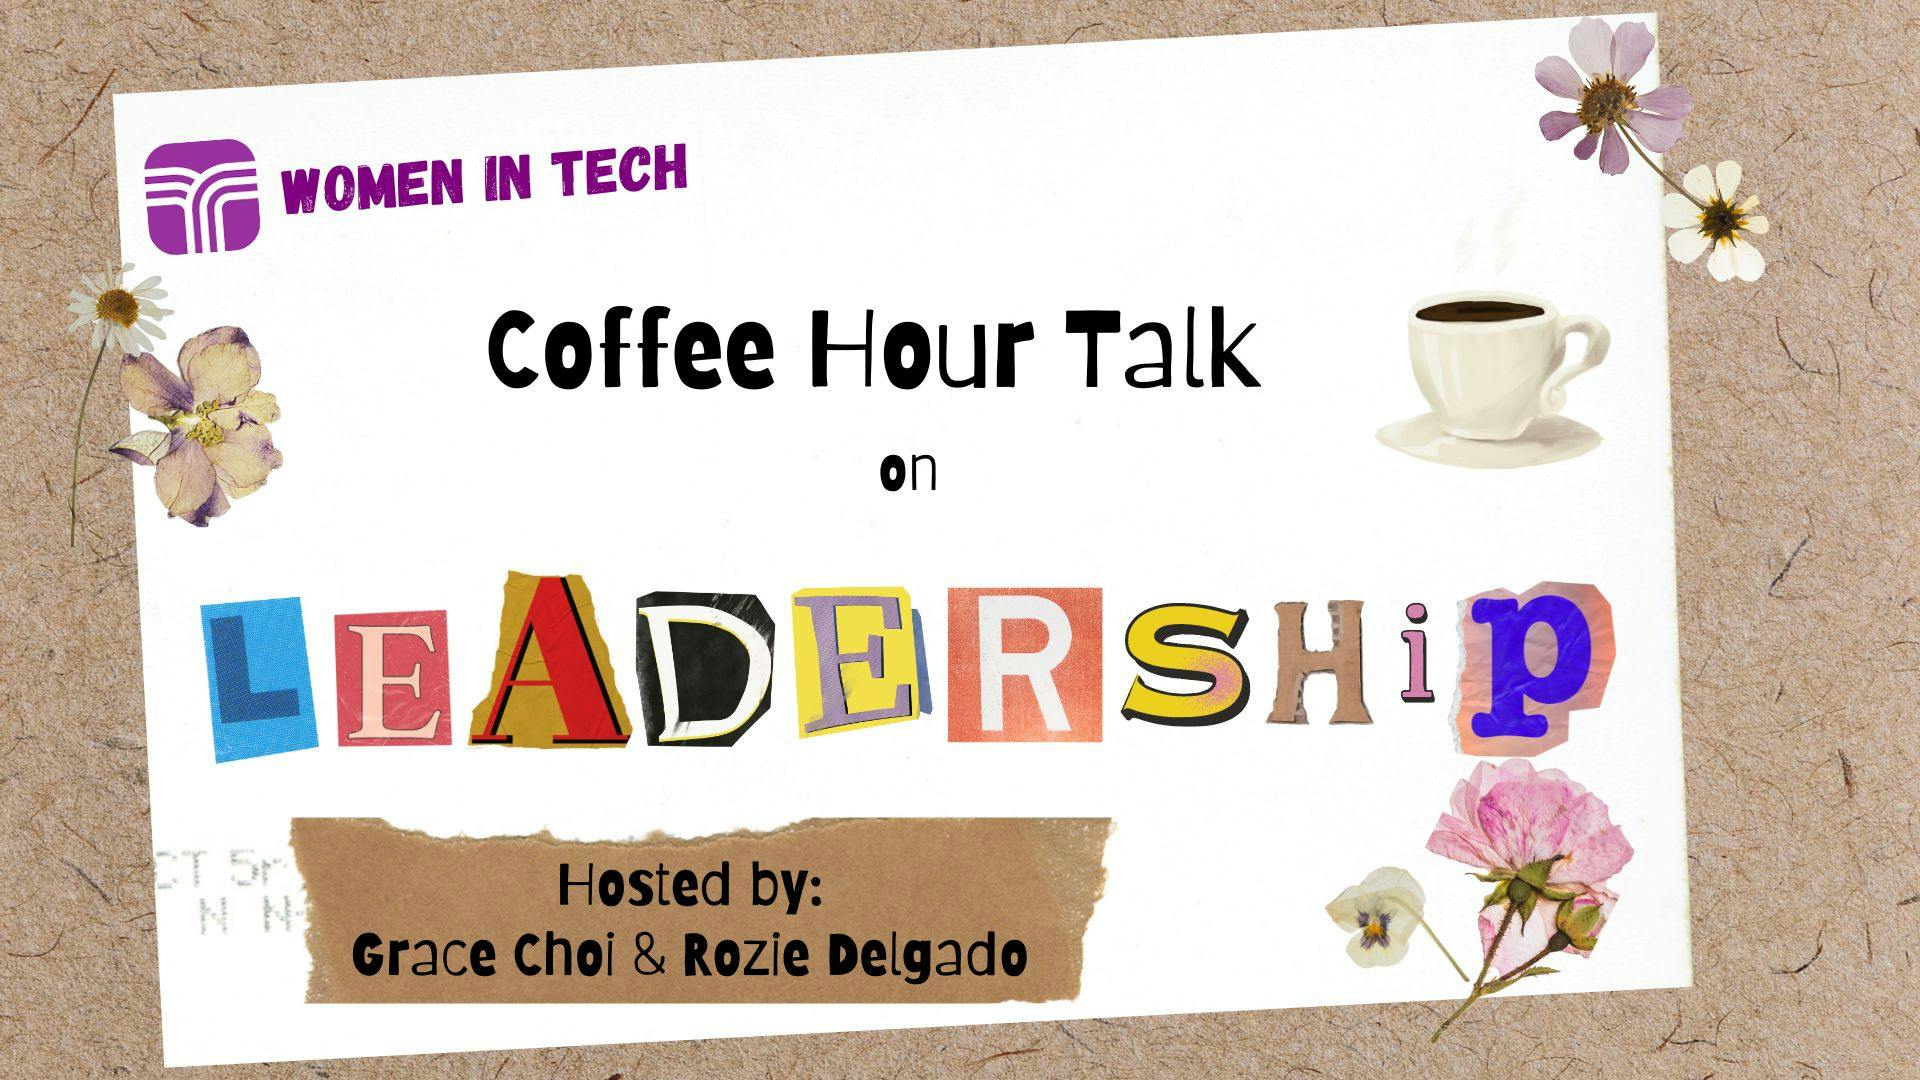 Women in Tech: Coffee Hour Talk on Leadership event